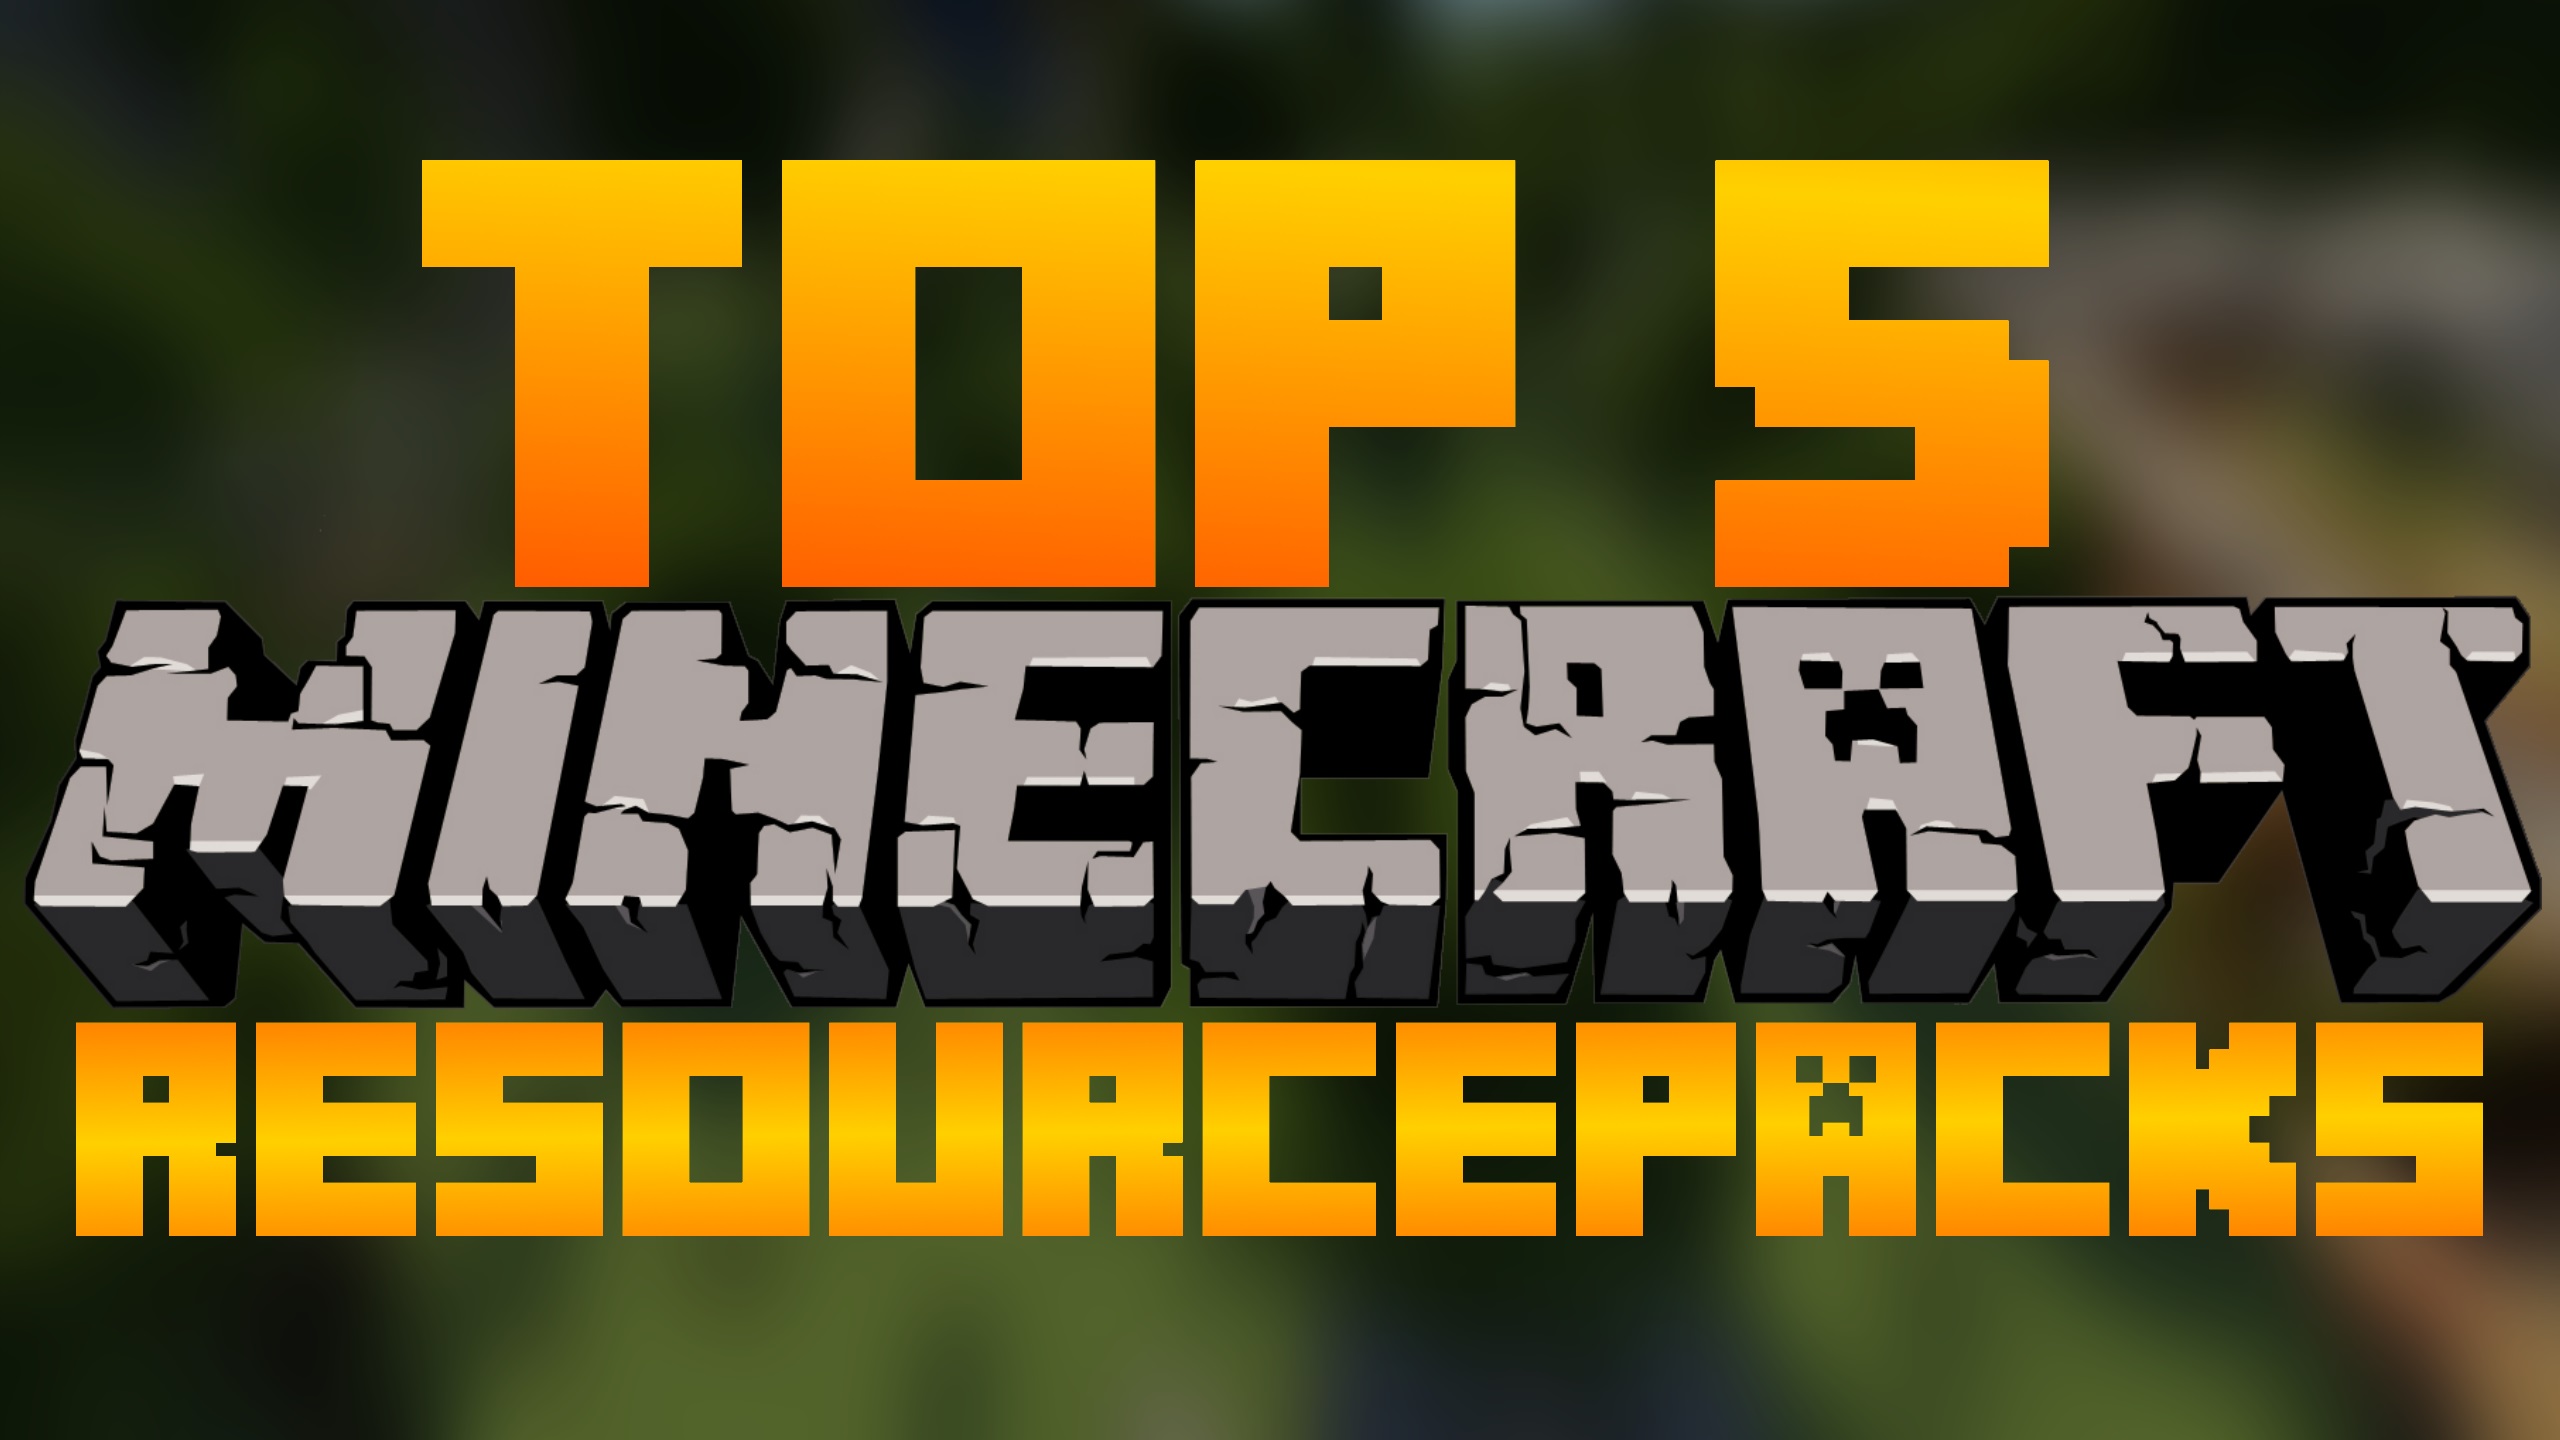 Top 5 Minecraft Resource Packs